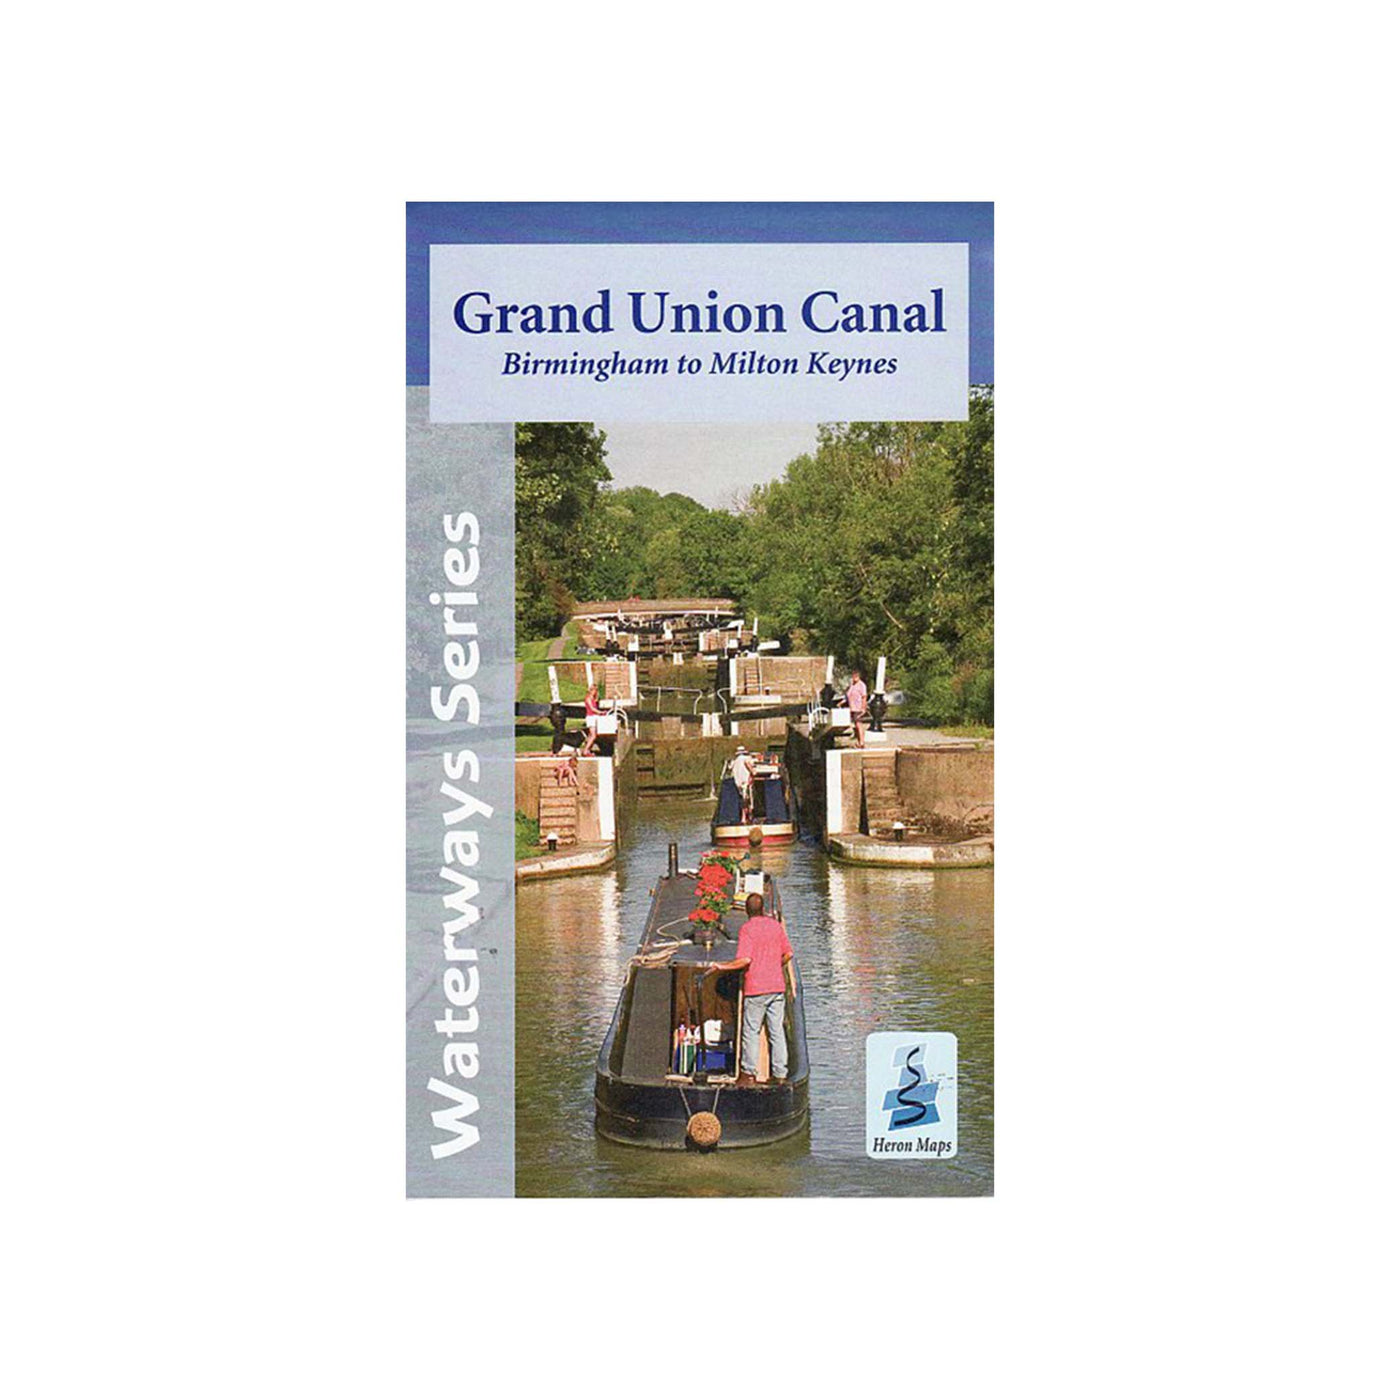 Grand Union Canal - Birmingham to Milton Keynes